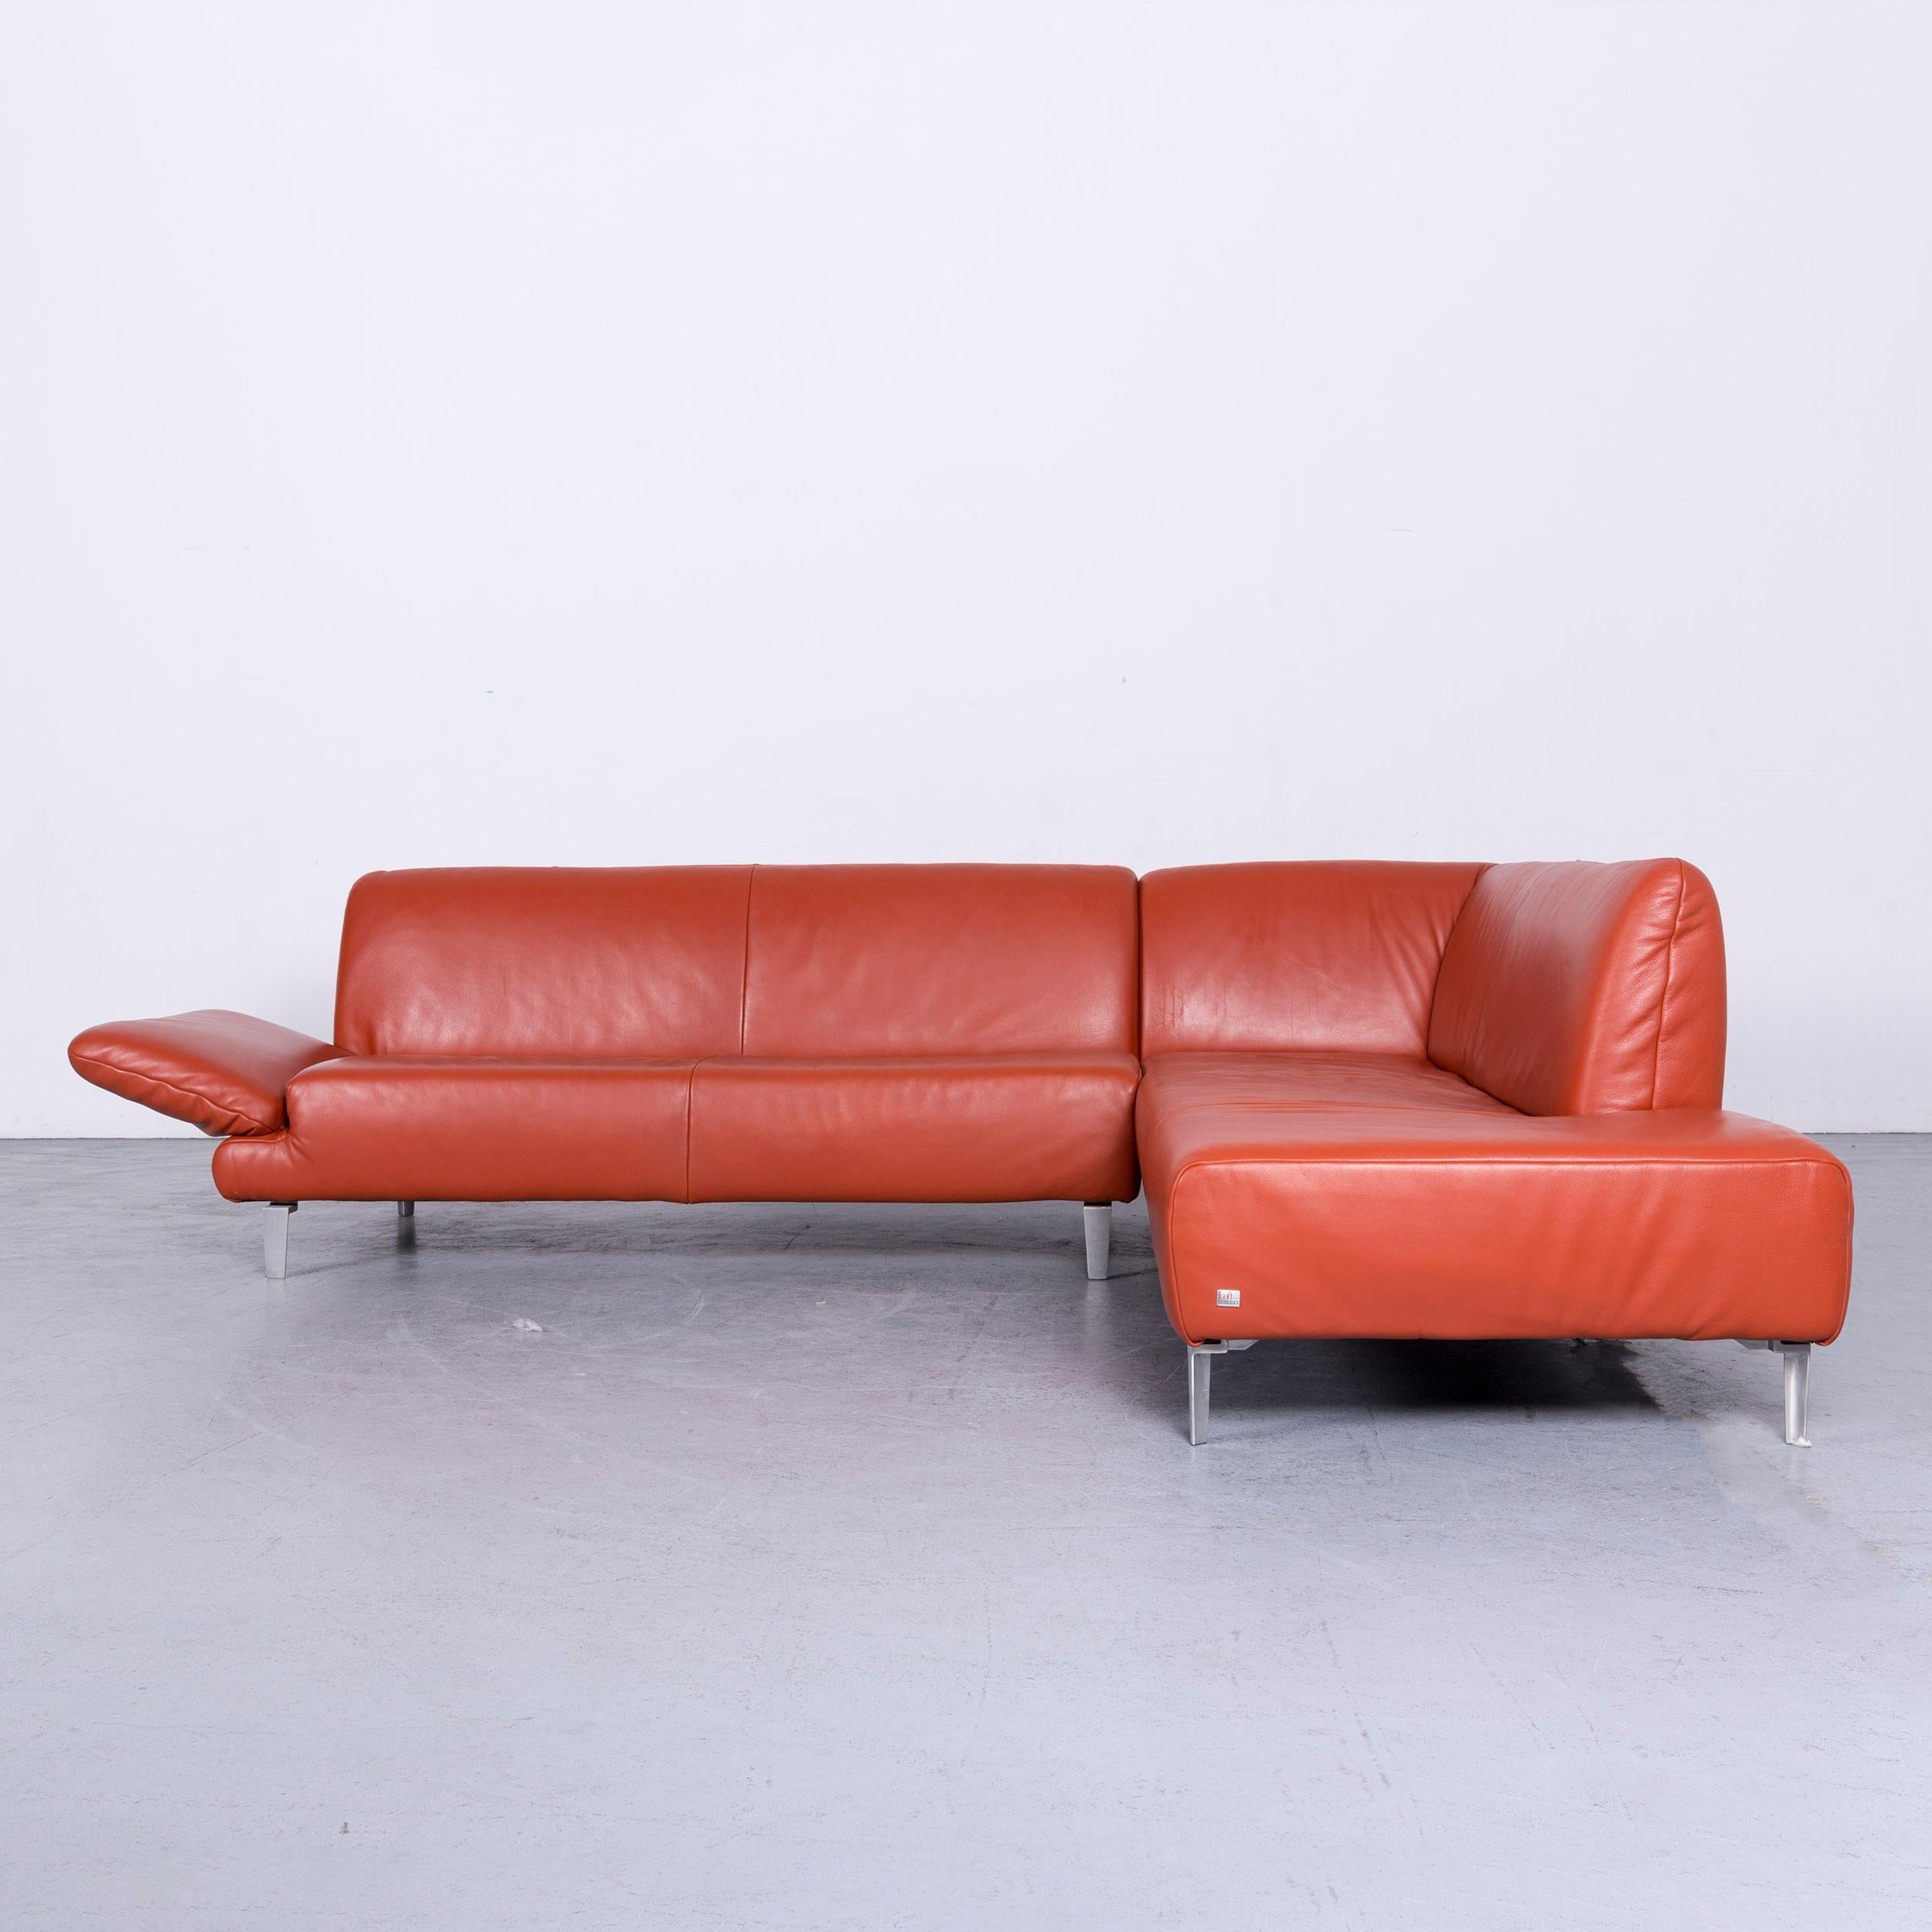 German Koinor Designer Leather Sofa in Orange Corner-Sofa Couch